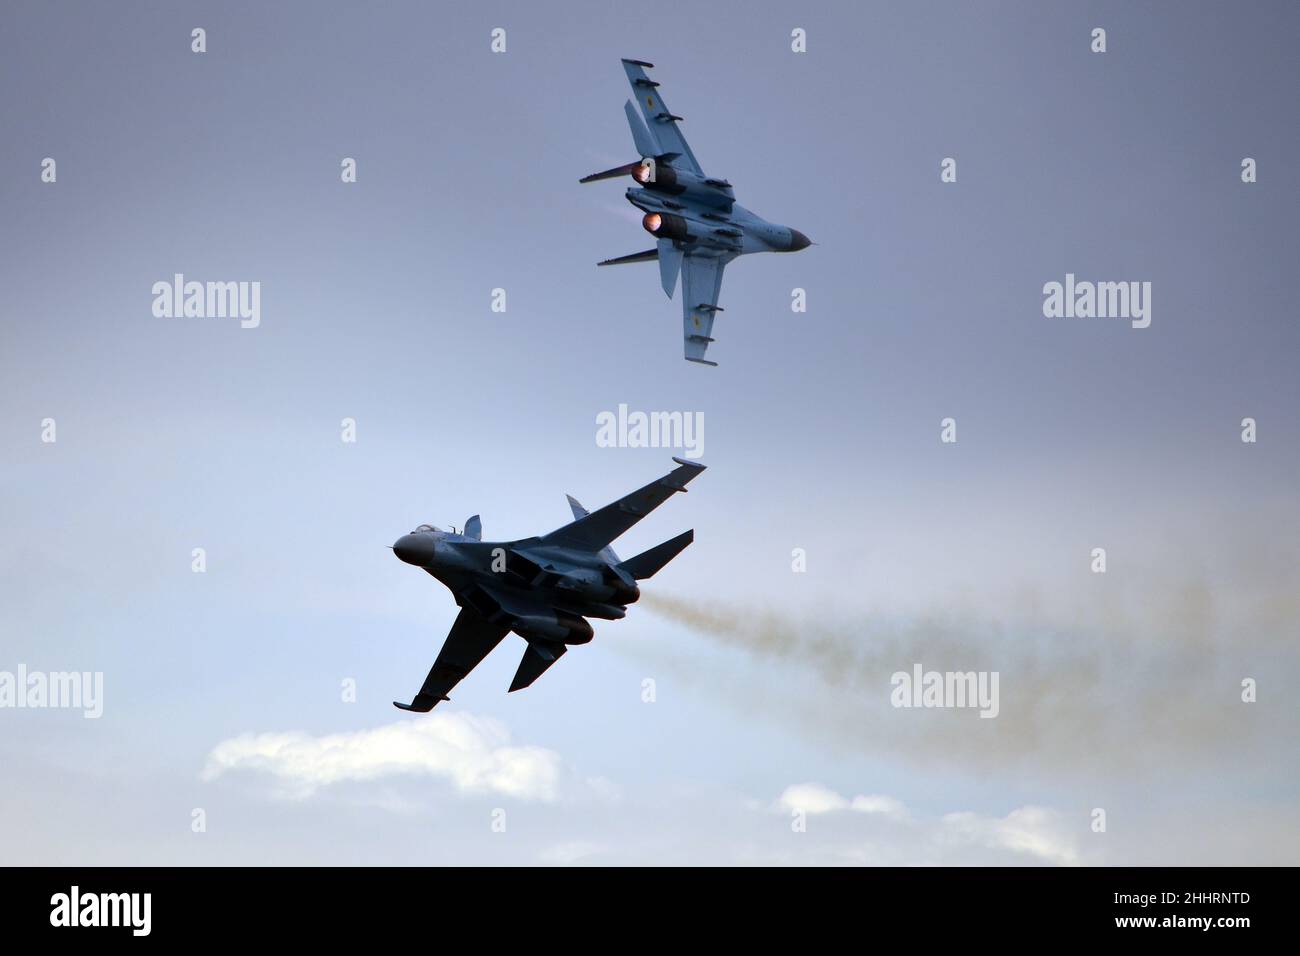 Ukrainian Air Force, Sukhoi Su-27 Flanker, dogfight, ghost of Kyiv, Ukraine Stock Photo